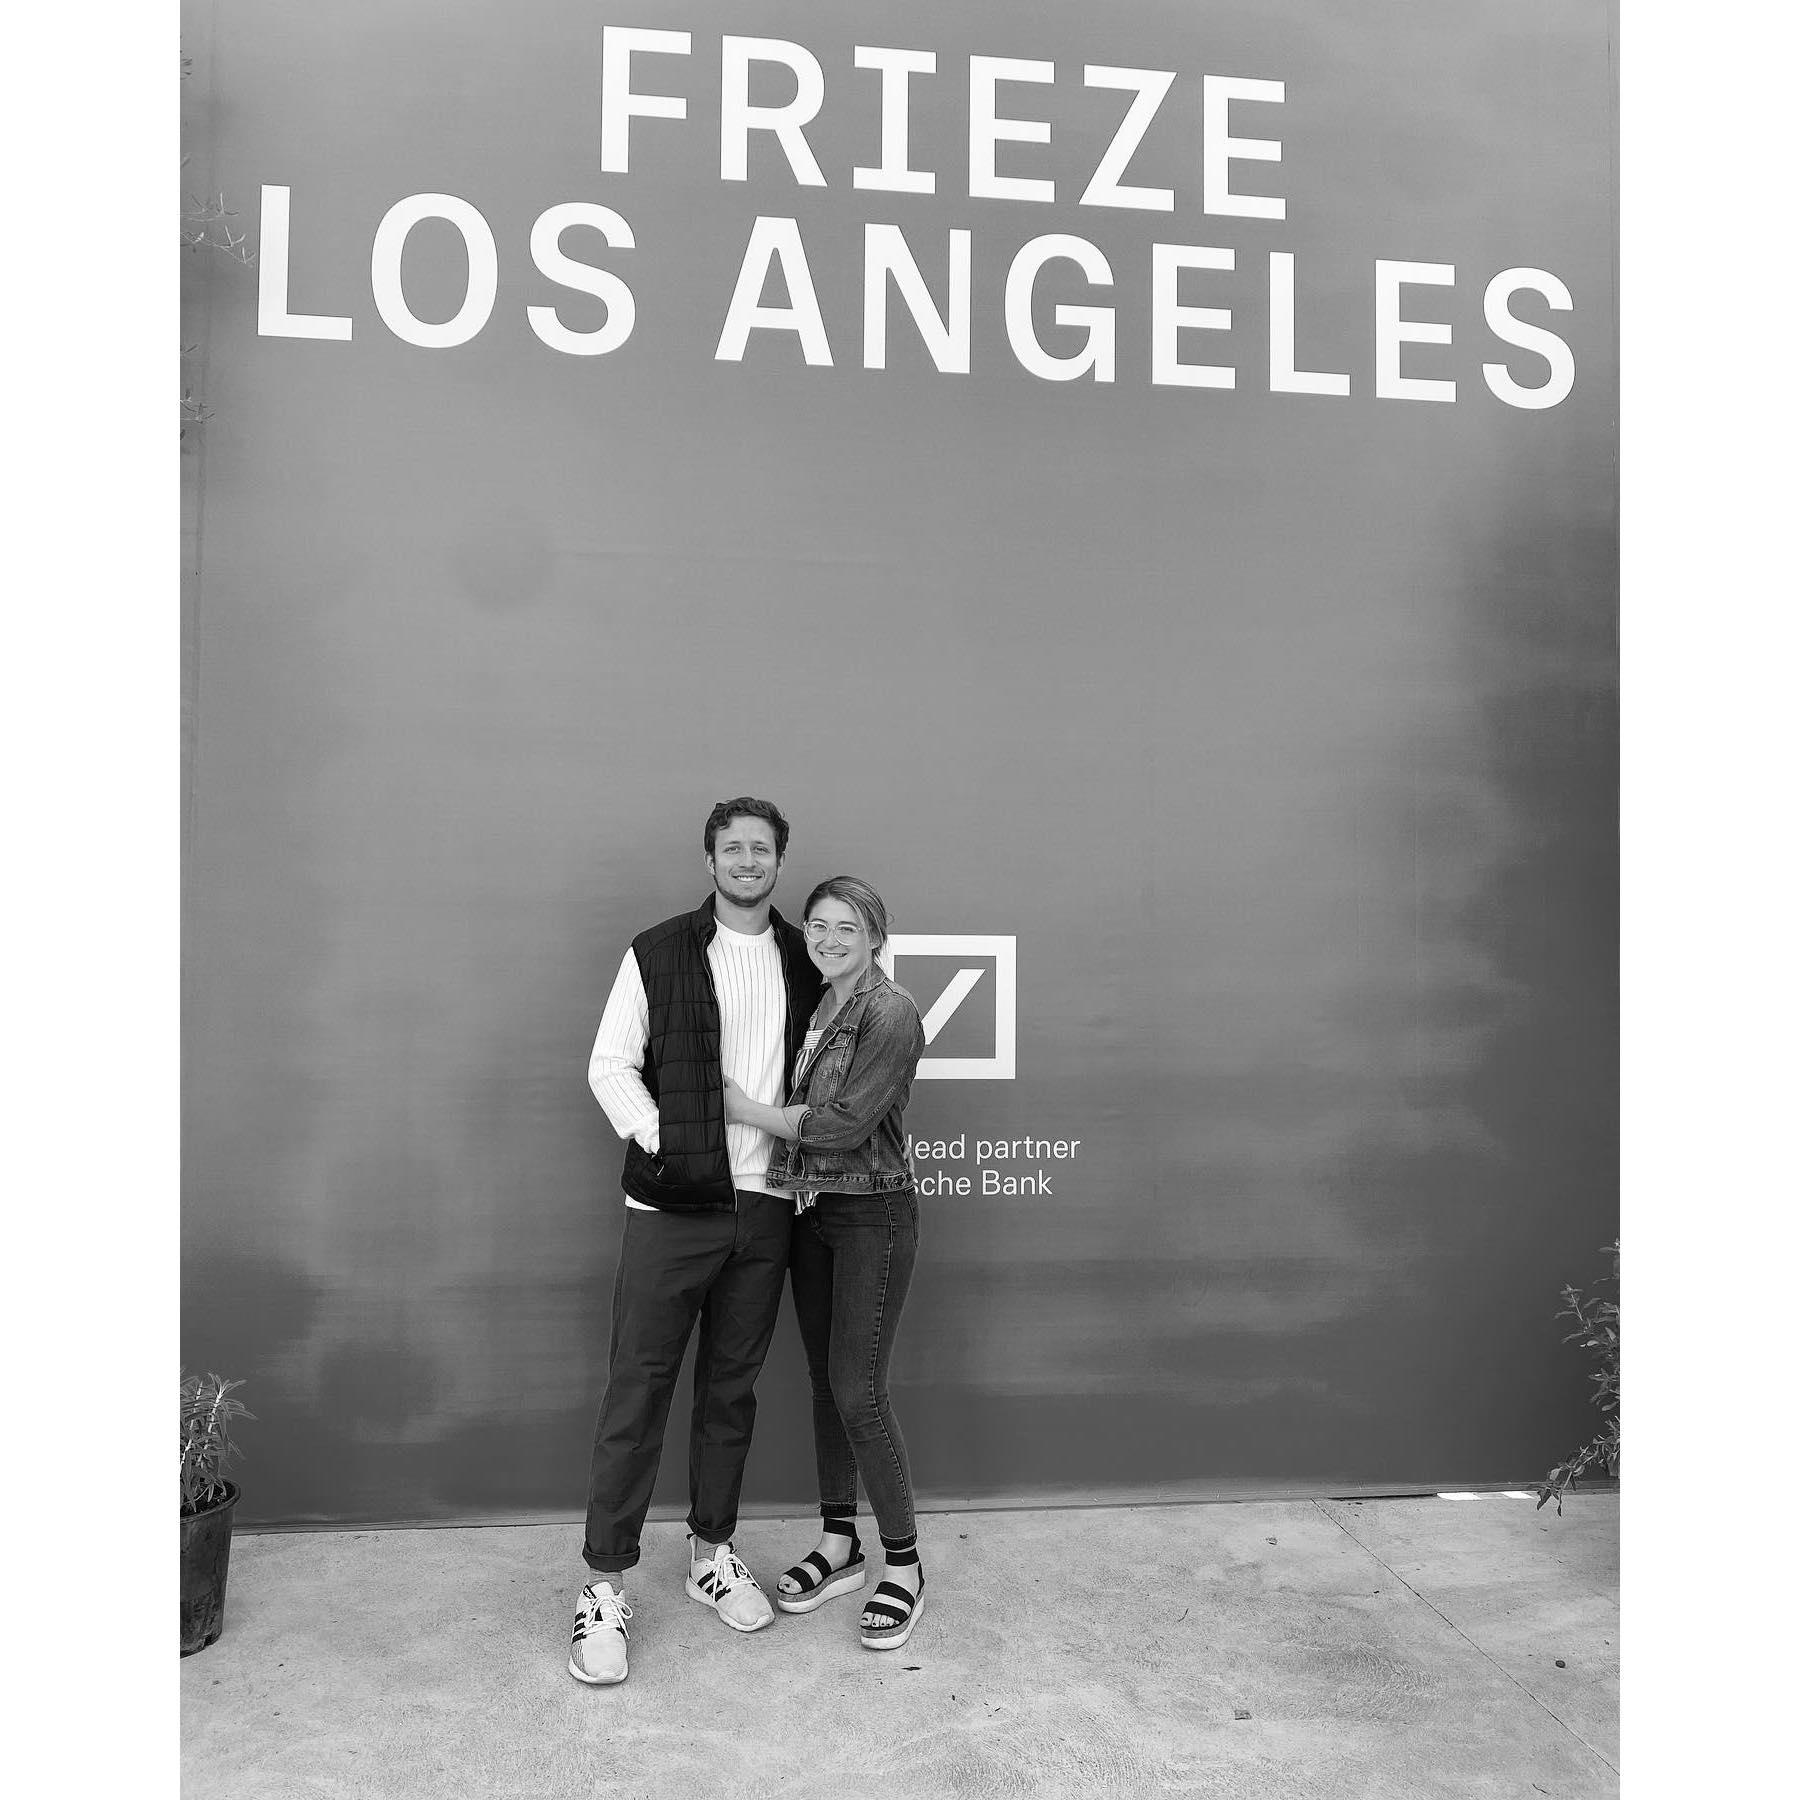 Frieze LA (we like art)